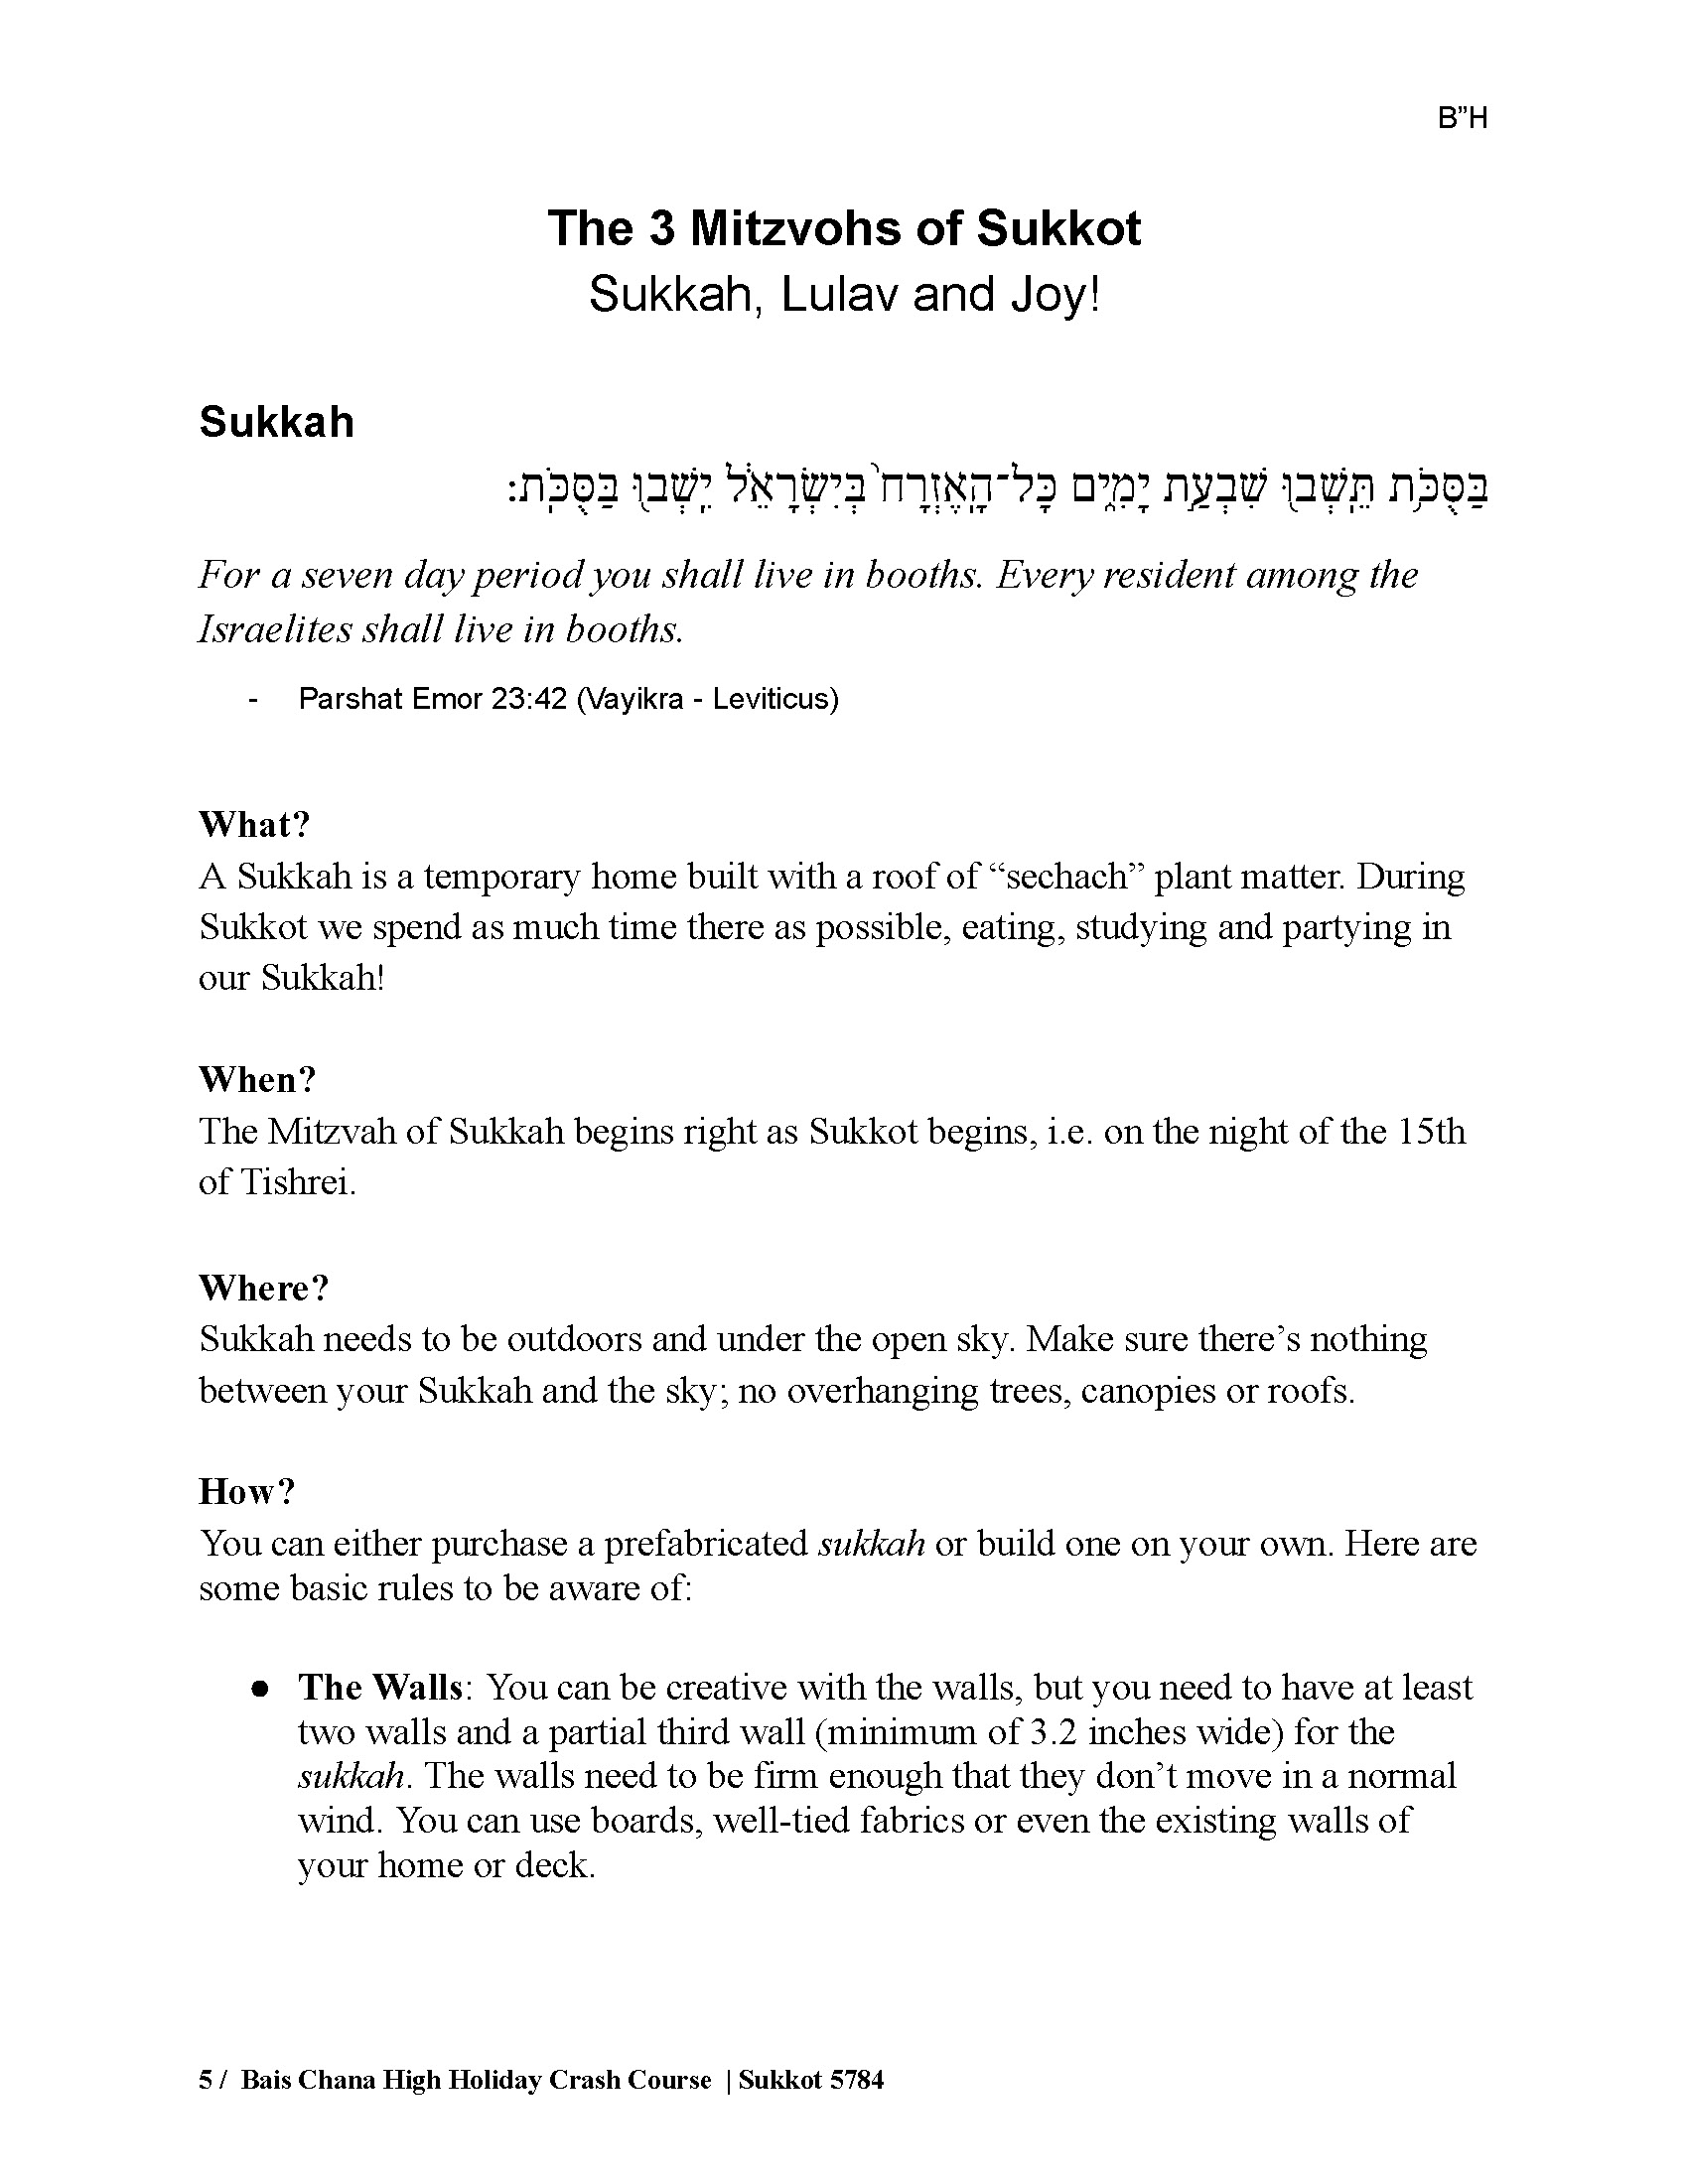 High Holidays 5784 - Sukkot crash course_Page_05